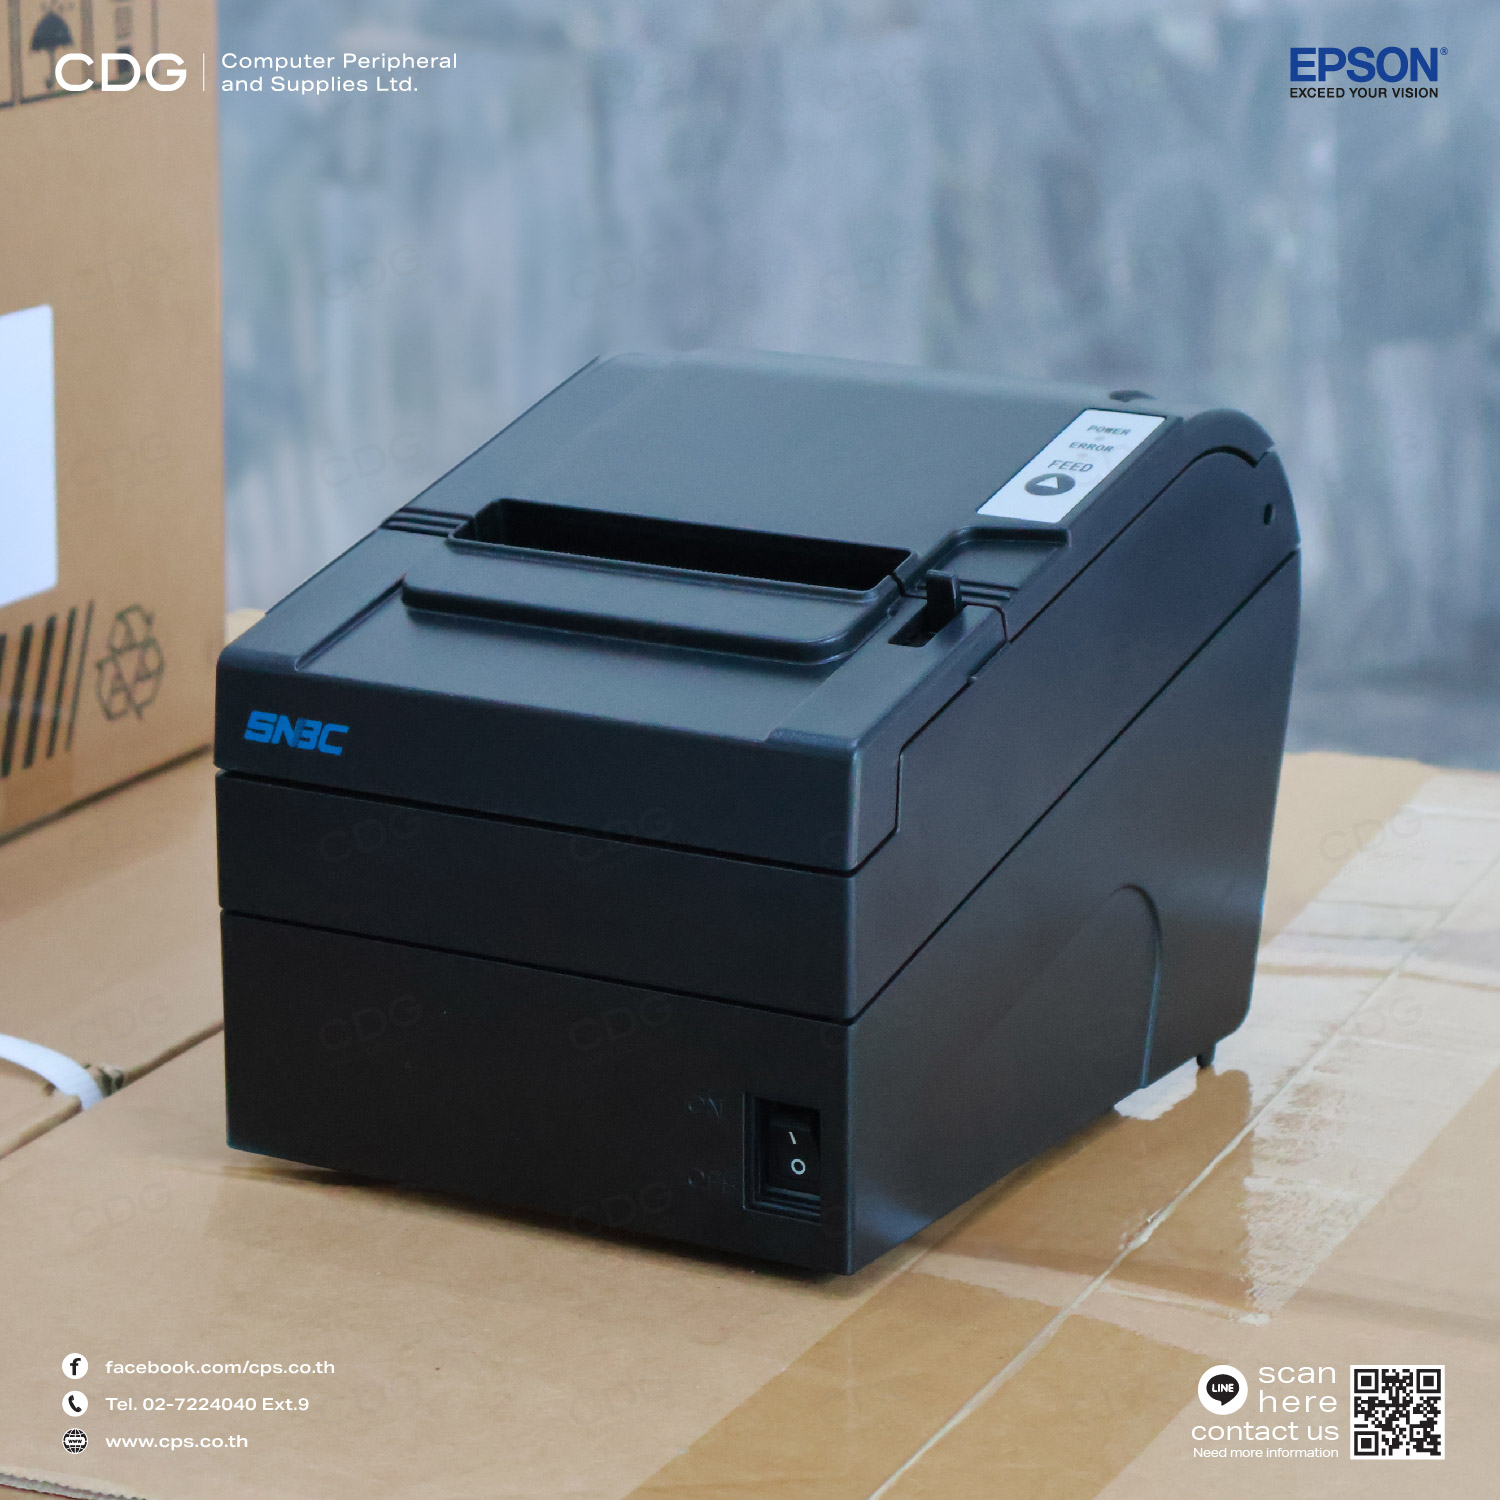 Thermal Receipt Printer SNBC Model U80II